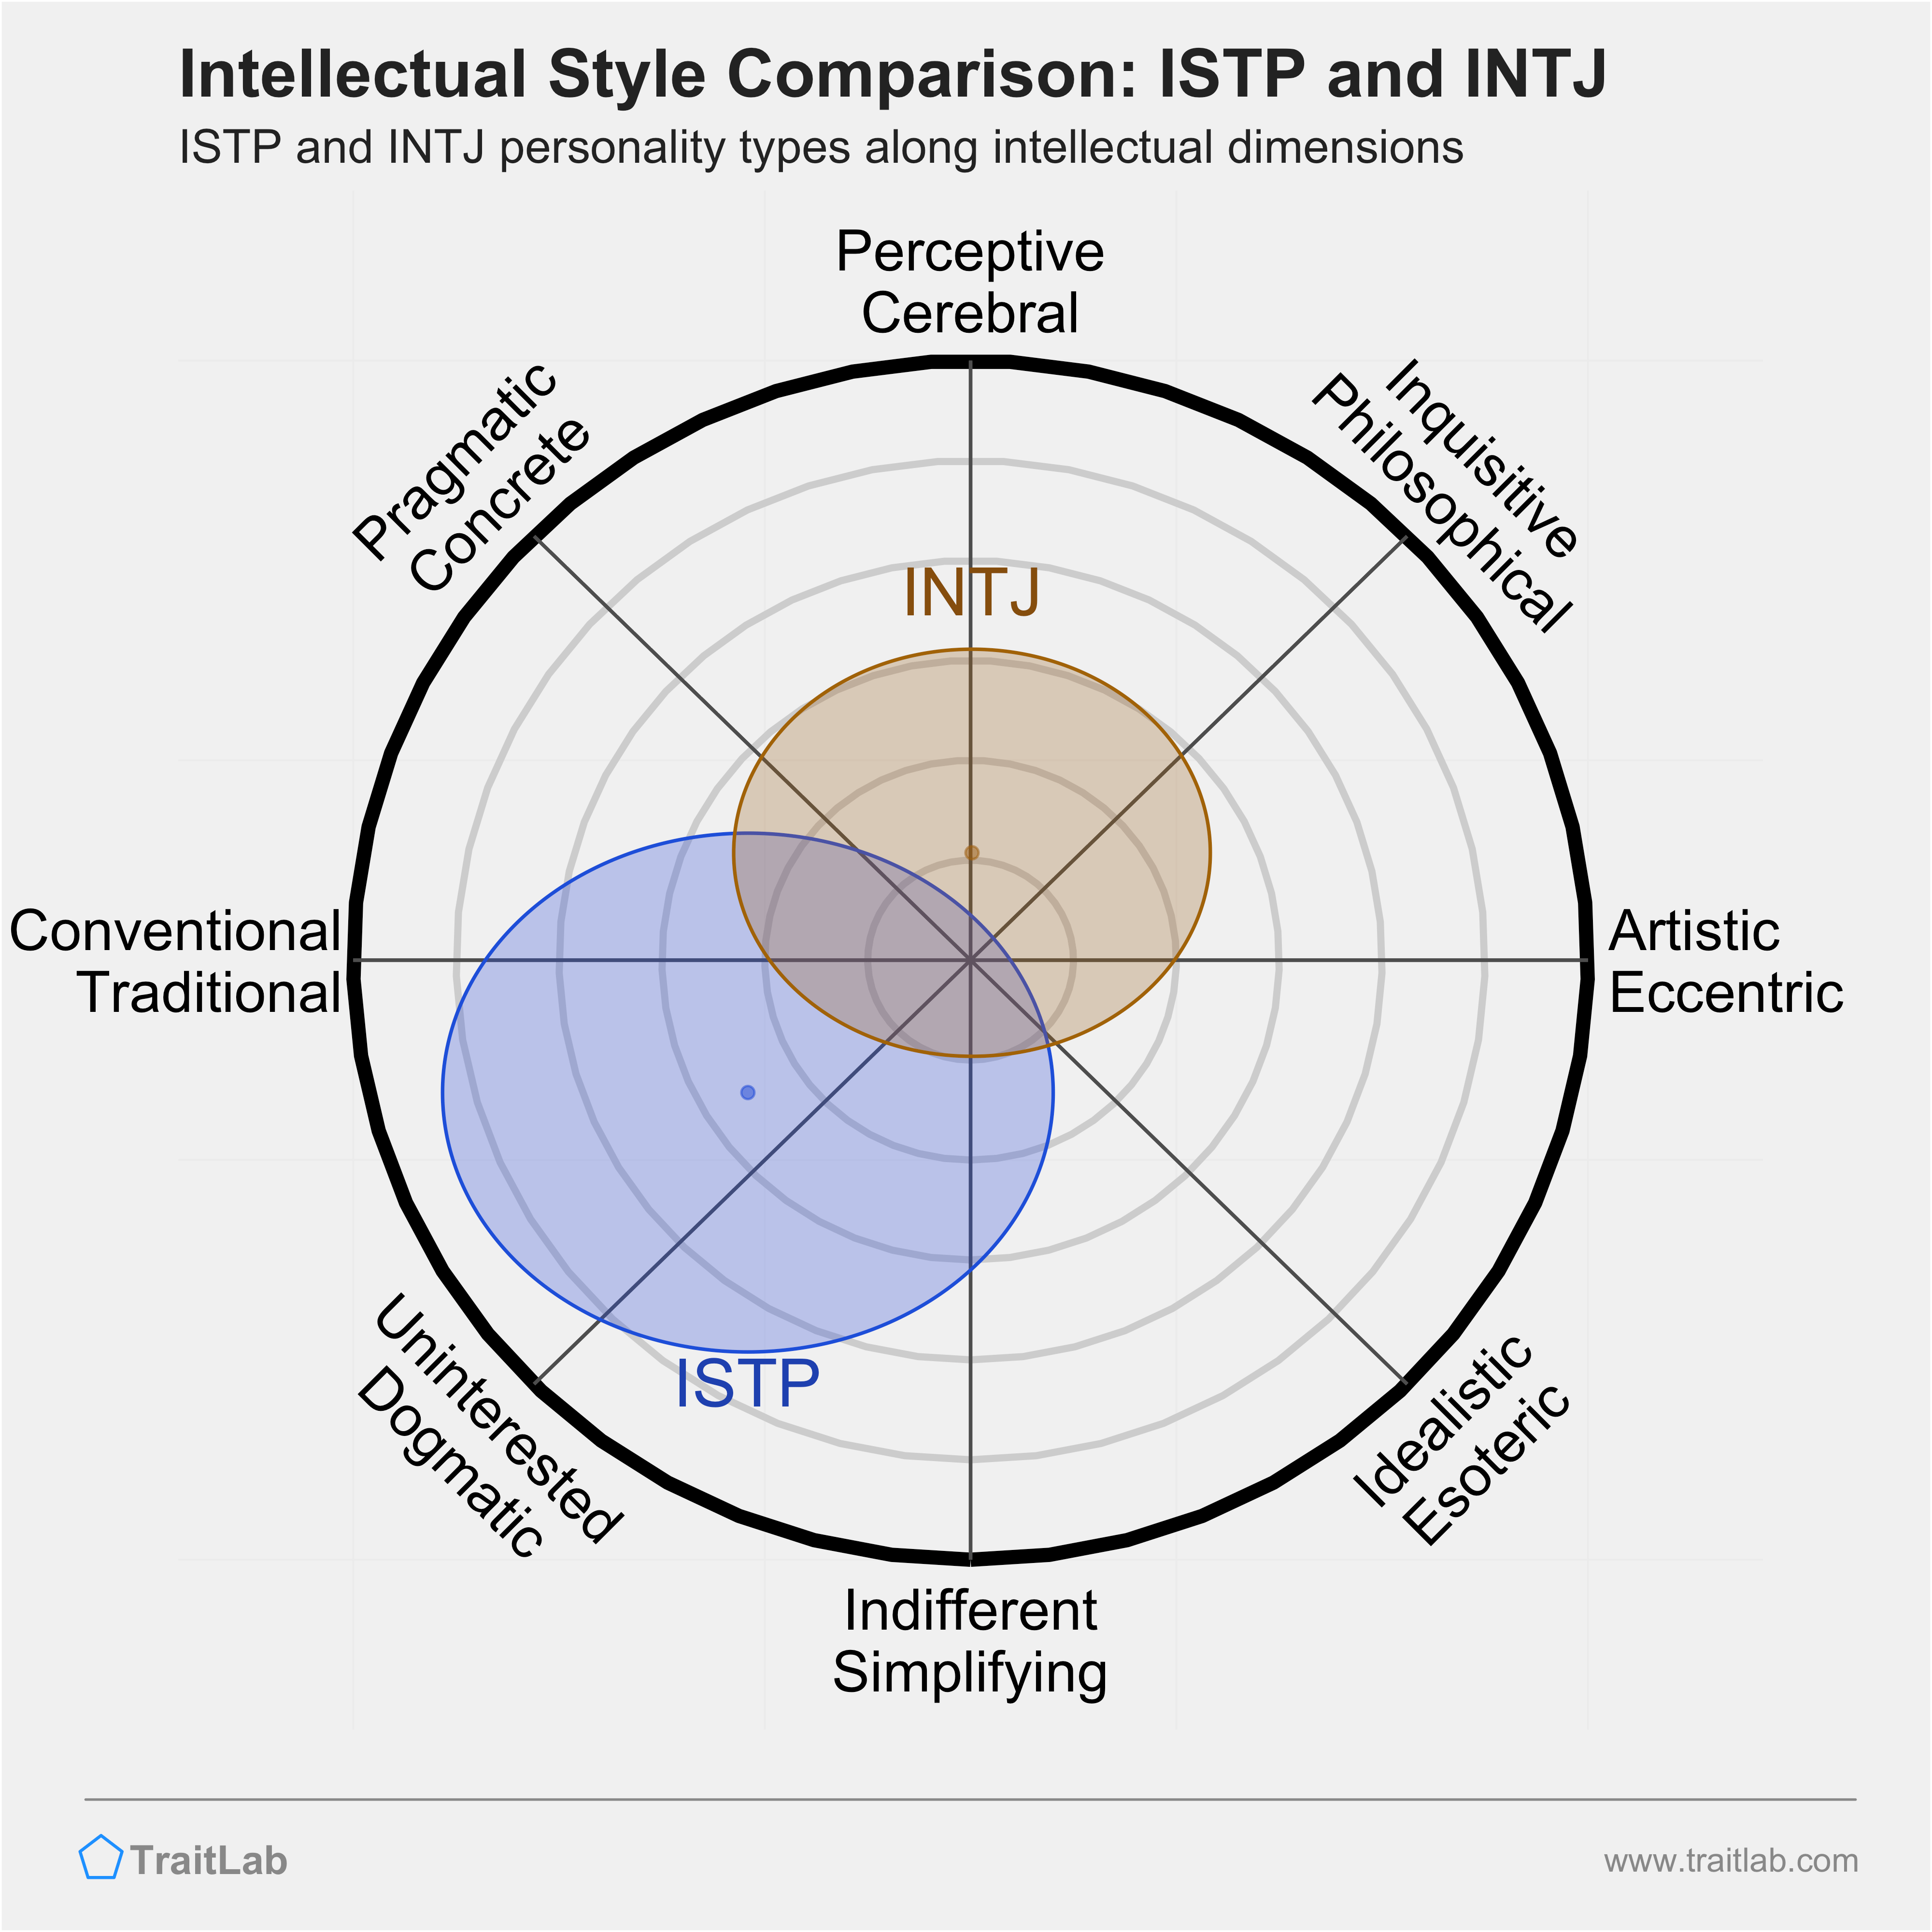 ISTP and INTJ comparison across intellectual dimensions